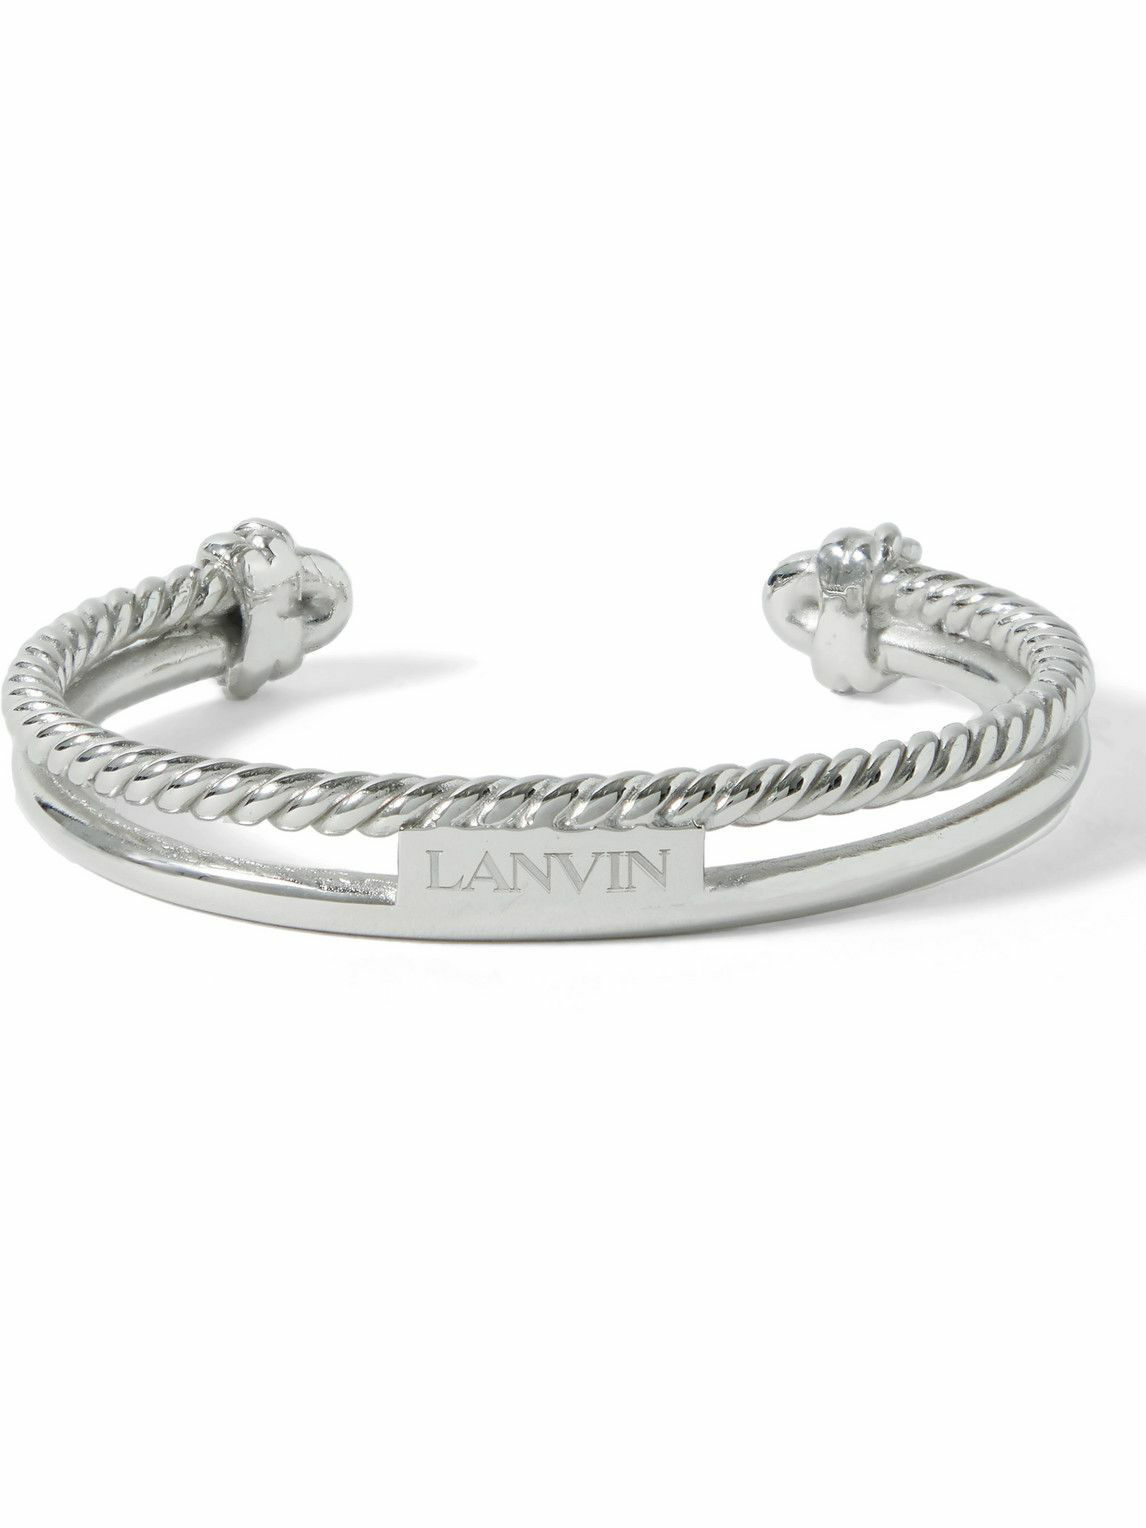 Photo: Lanvin - Logo-Engraved Silver-Tone Cuff